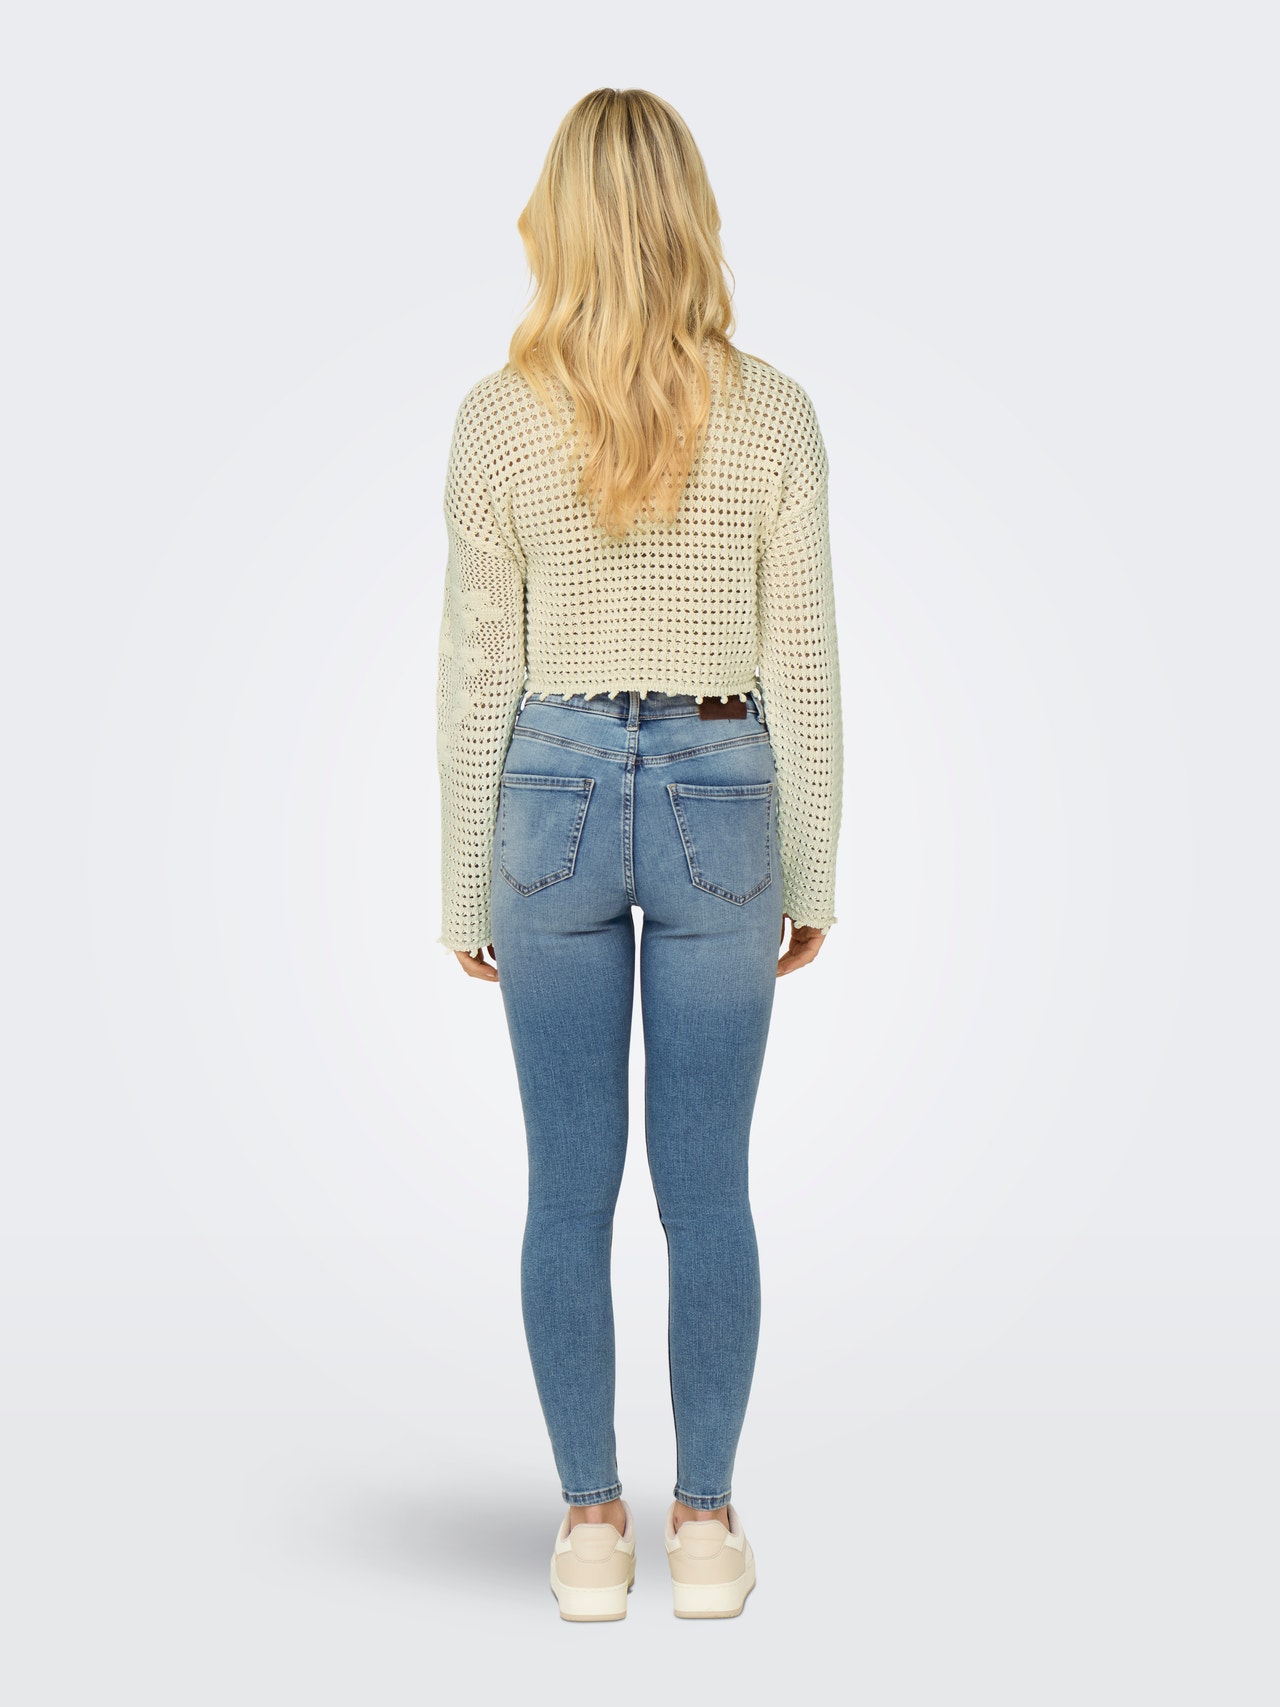 ONLY Skinny Fit Mid waist Jeans -Light Blue Denim - 15244626